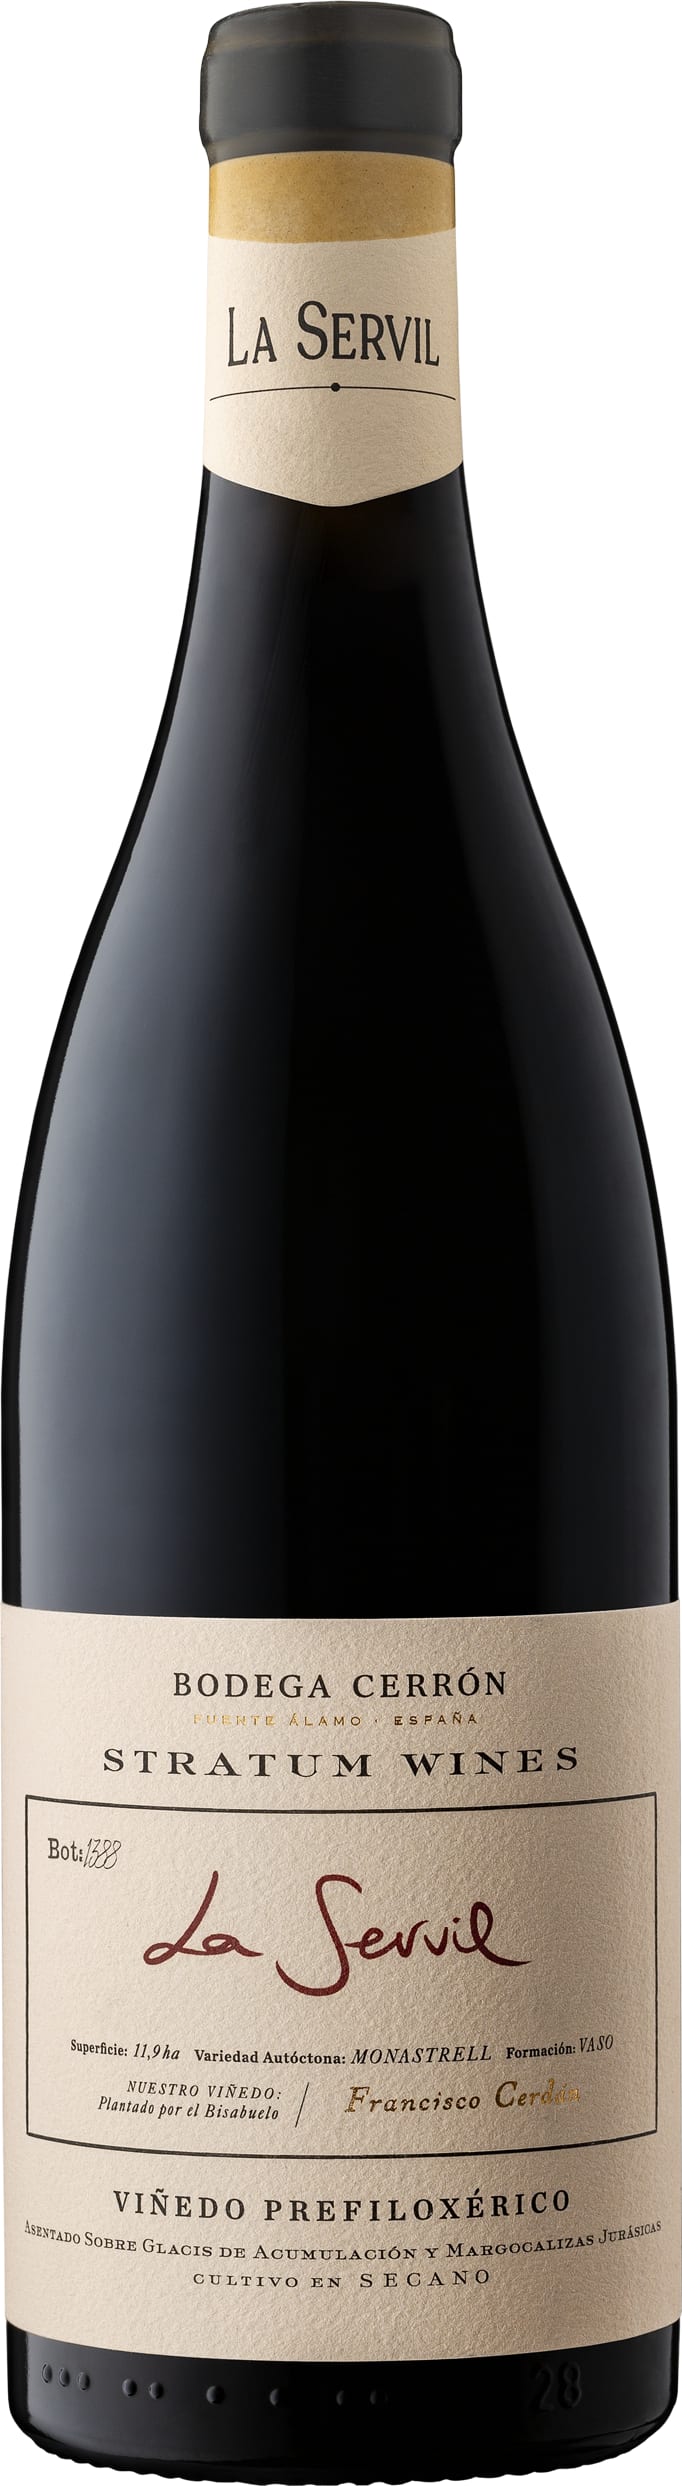 Bodega Cerron La Servil Monastrell 2021 75cl - Buy Bodega Cerron Wines from GREAT WINES DIRECT wine shop